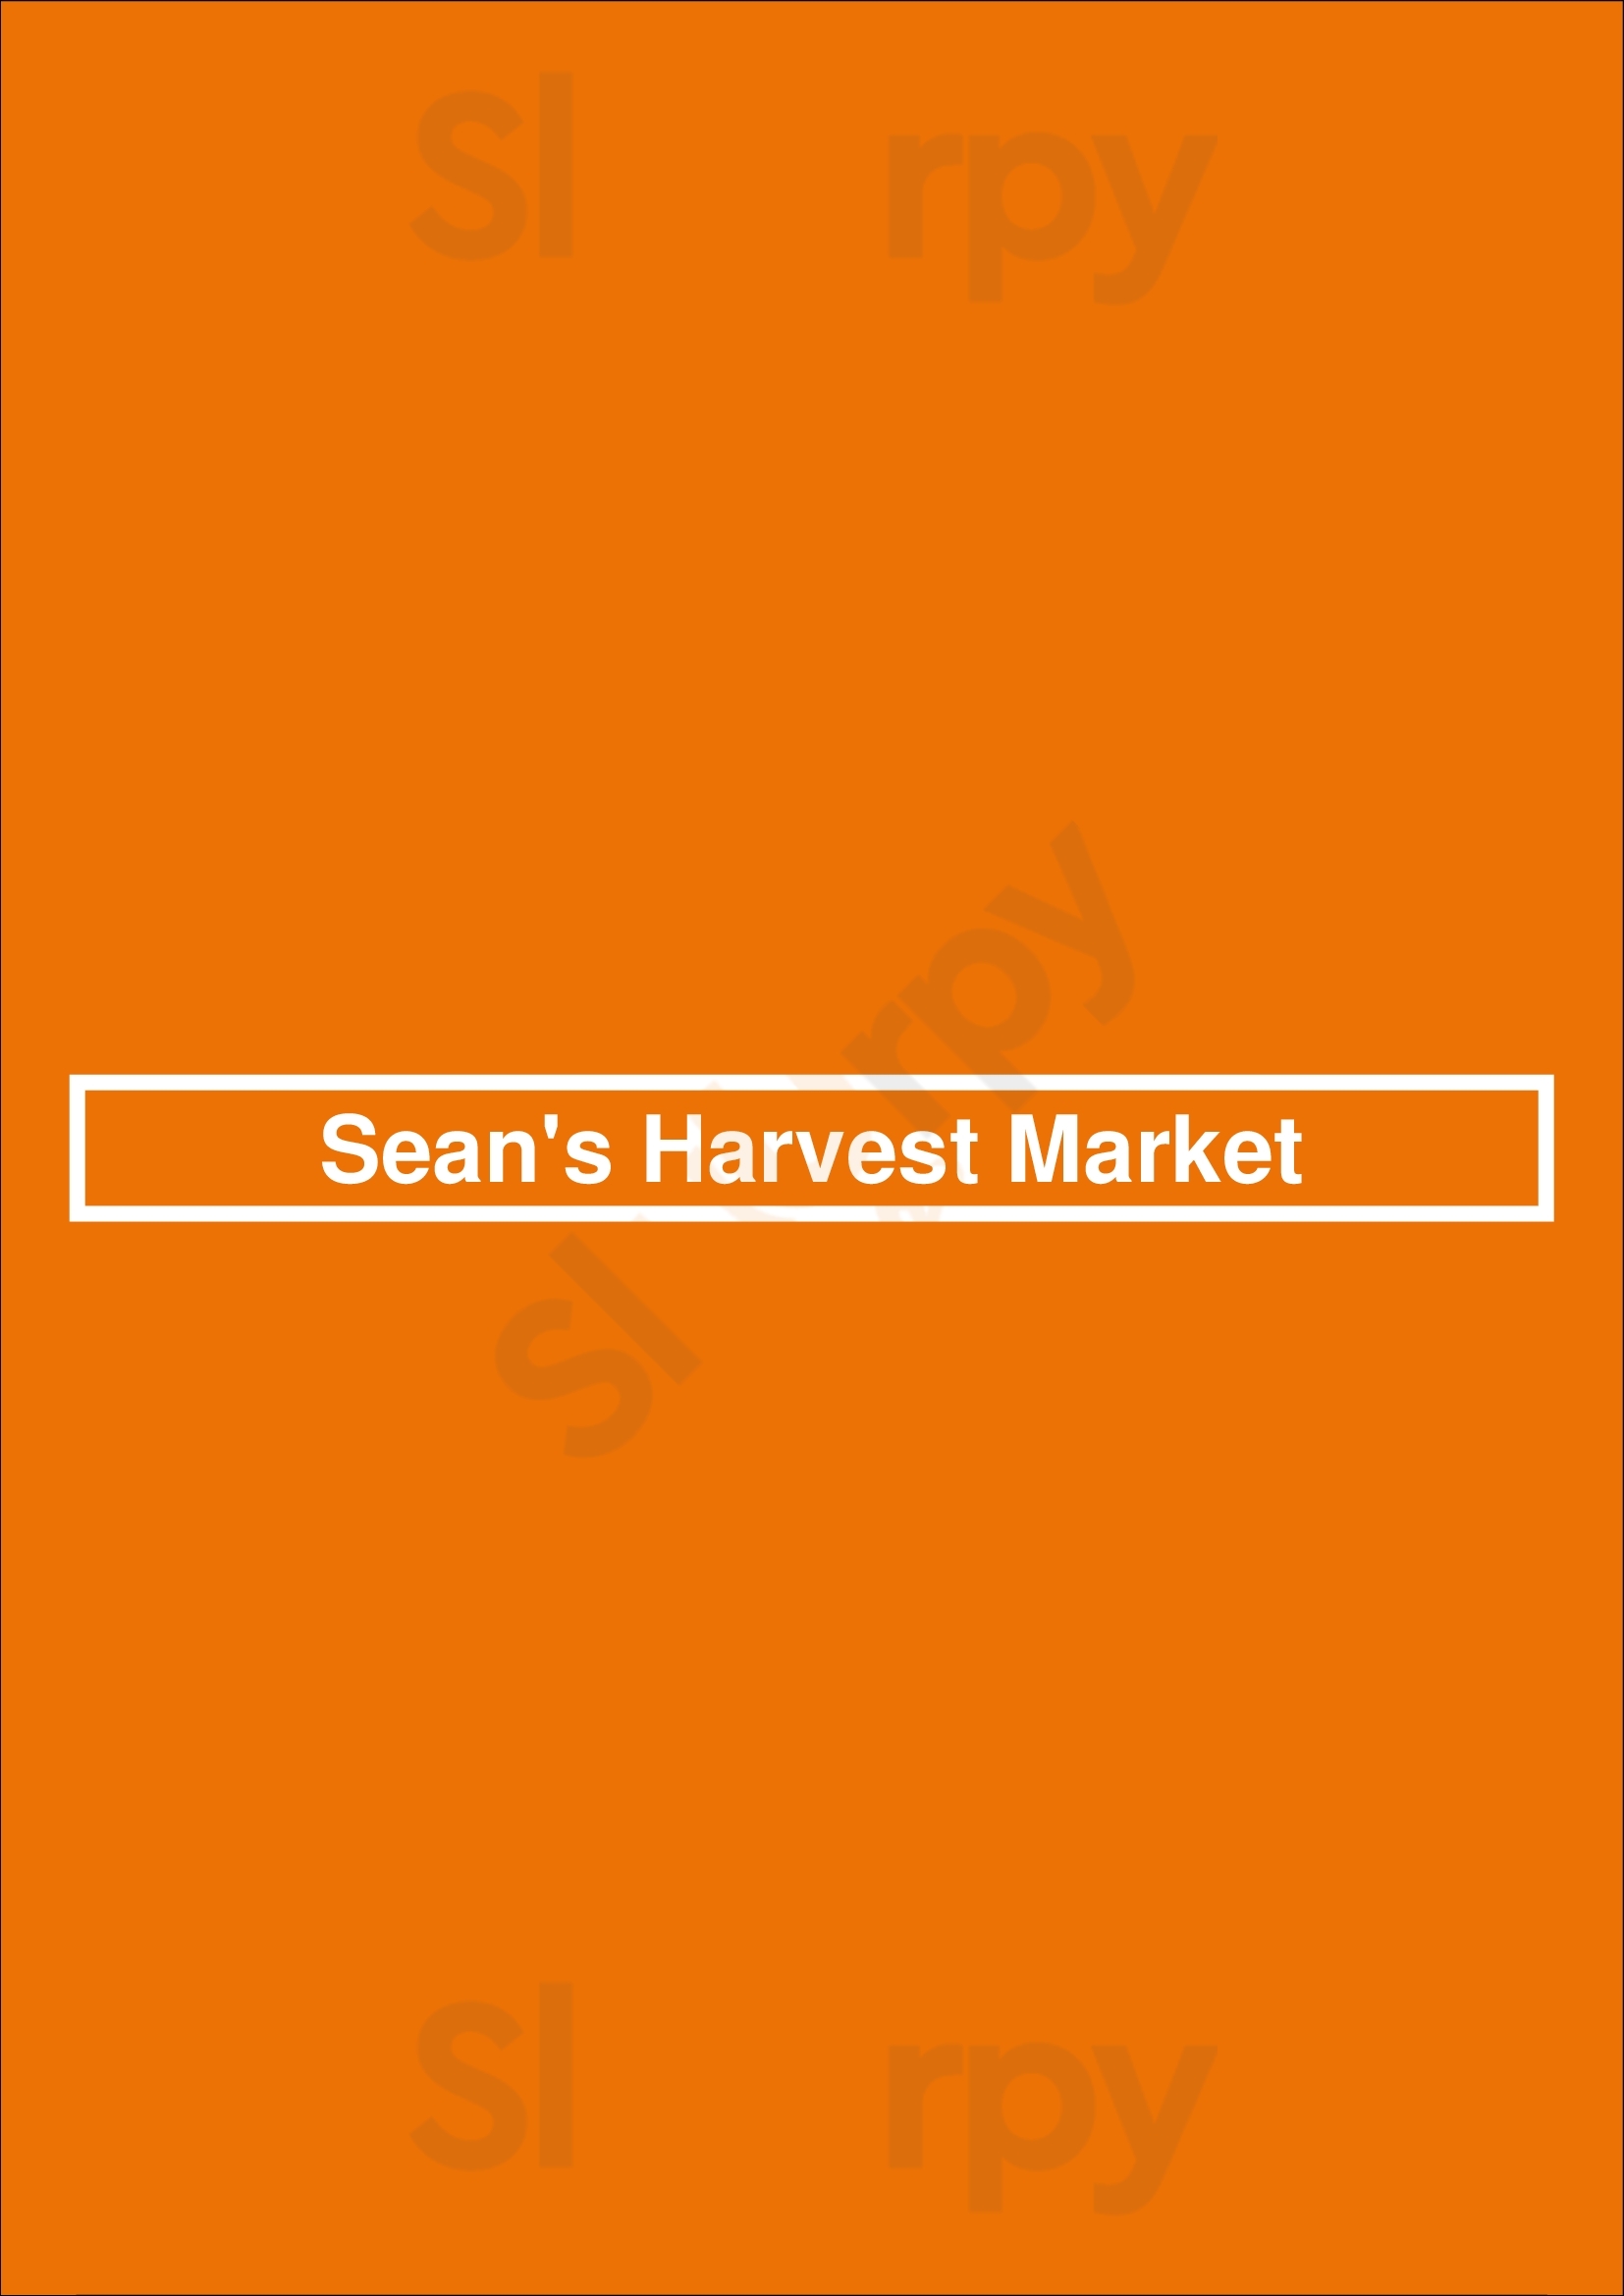 Sean's Harvest Market Atlanta Menu - 1